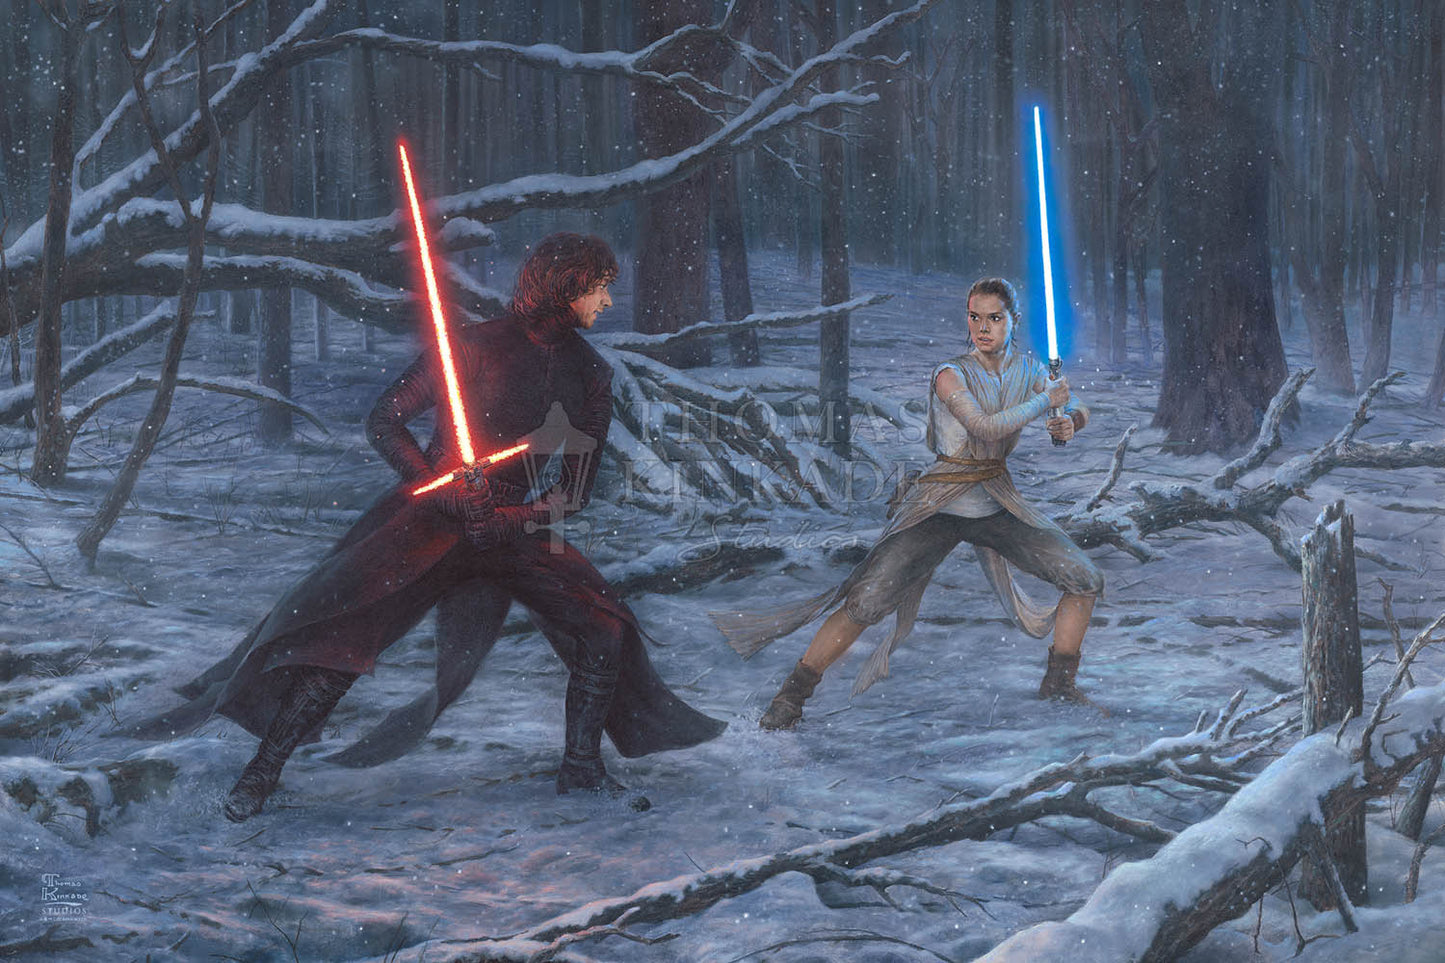 Thomas Kinkade Studios "The Duel: Rey vs. Ren" Limited Edition Canvas Giclee